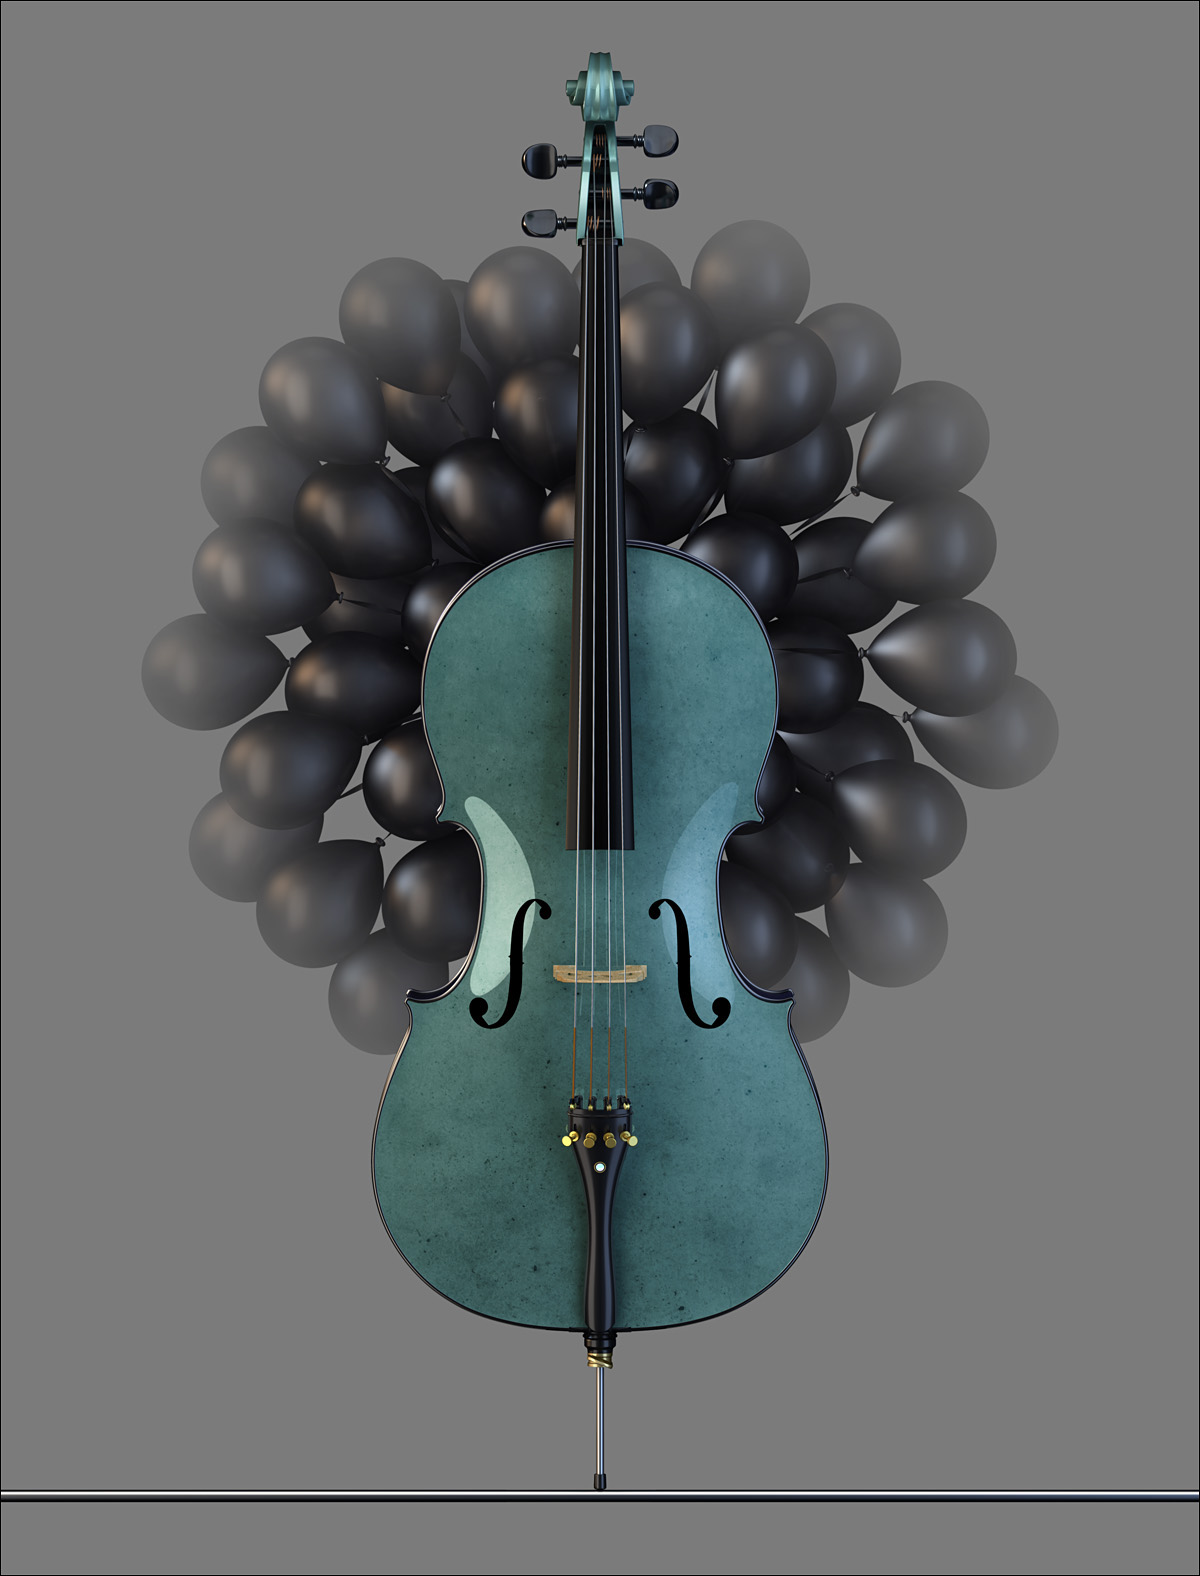 Installation Art balloons 3D mood cello CGI